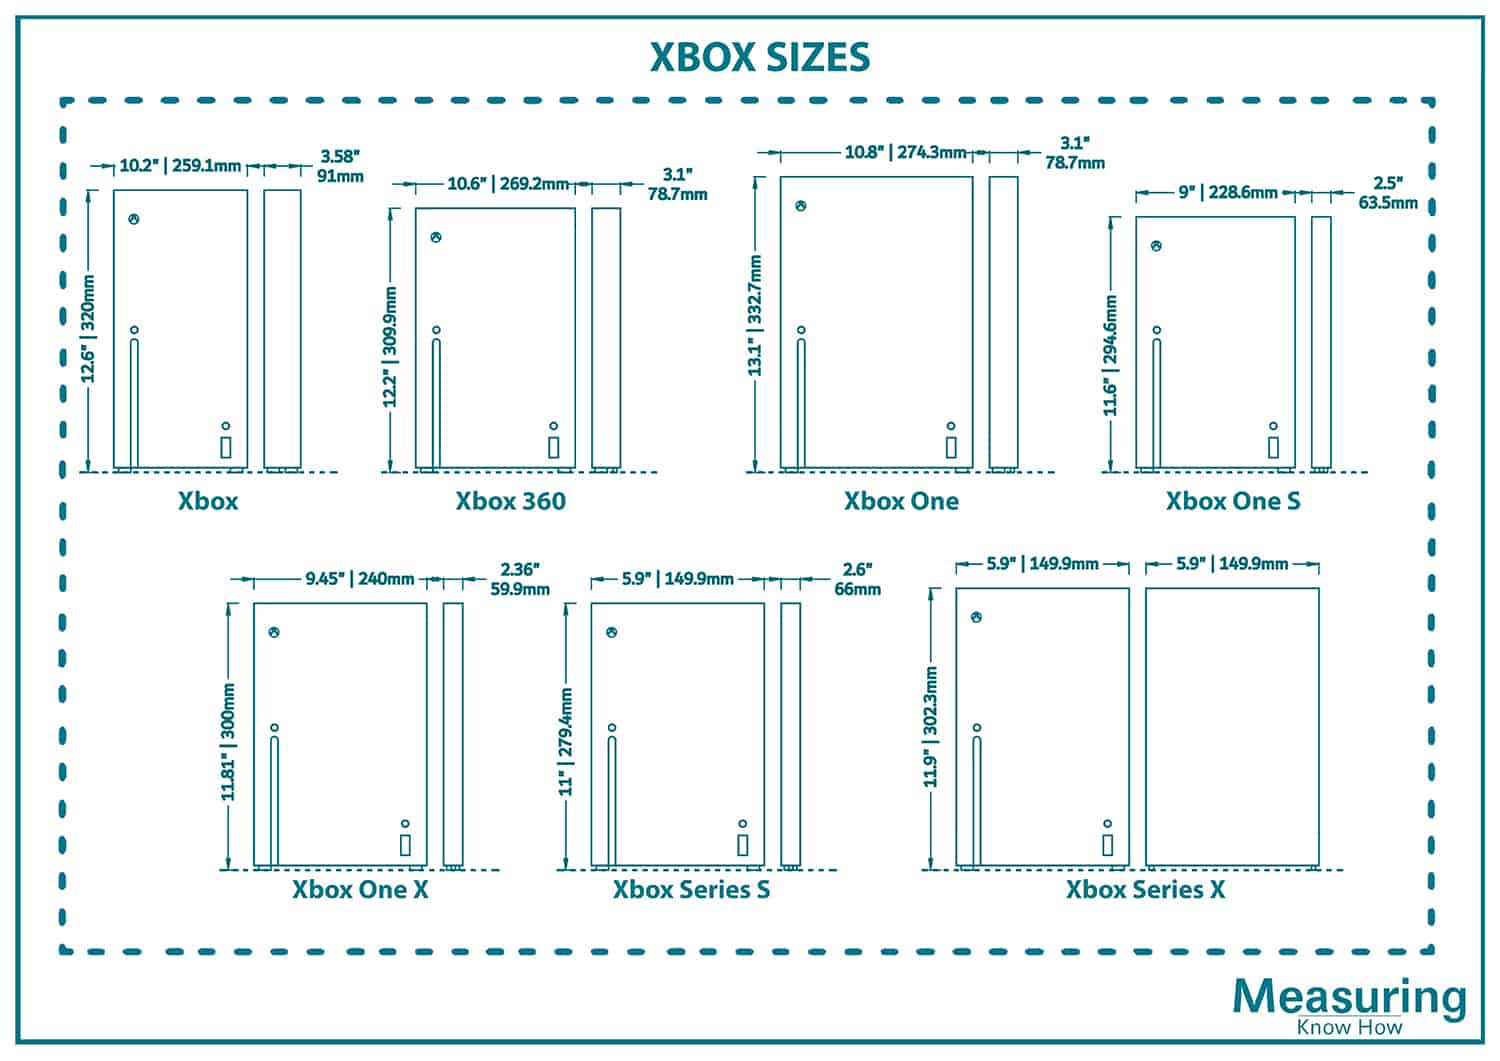 Xbox sizes